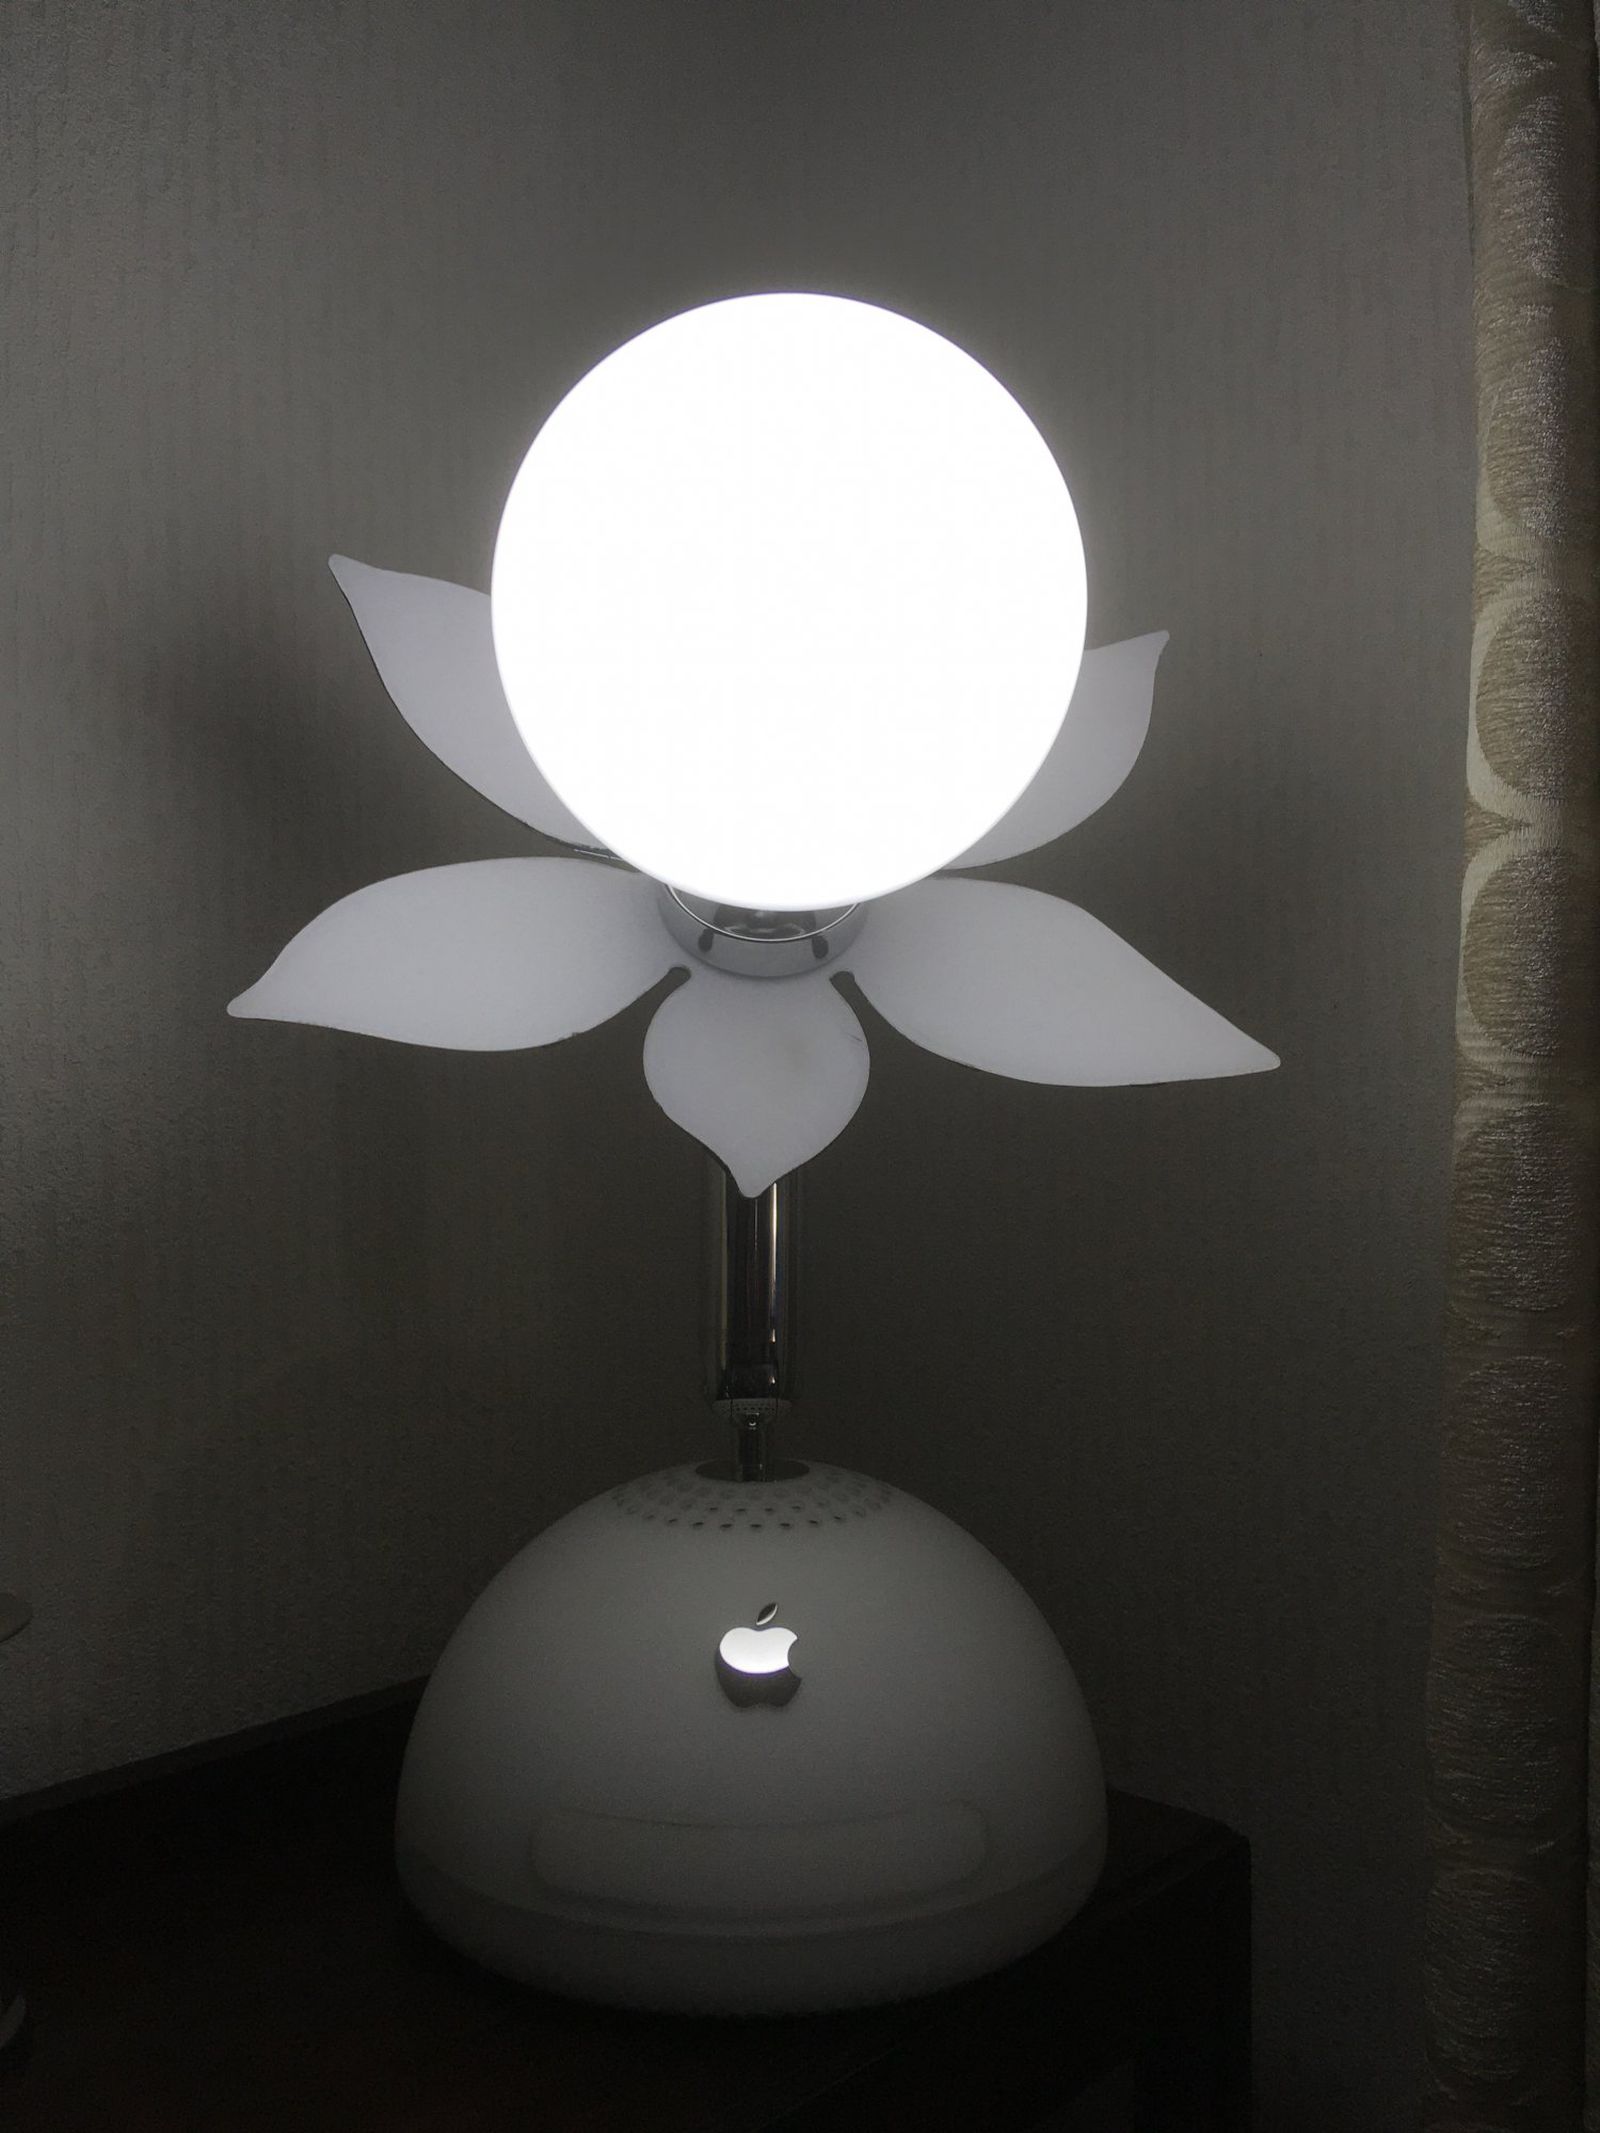 Gallery Imac G4 Transformed Into Desk Lamp Macrumors